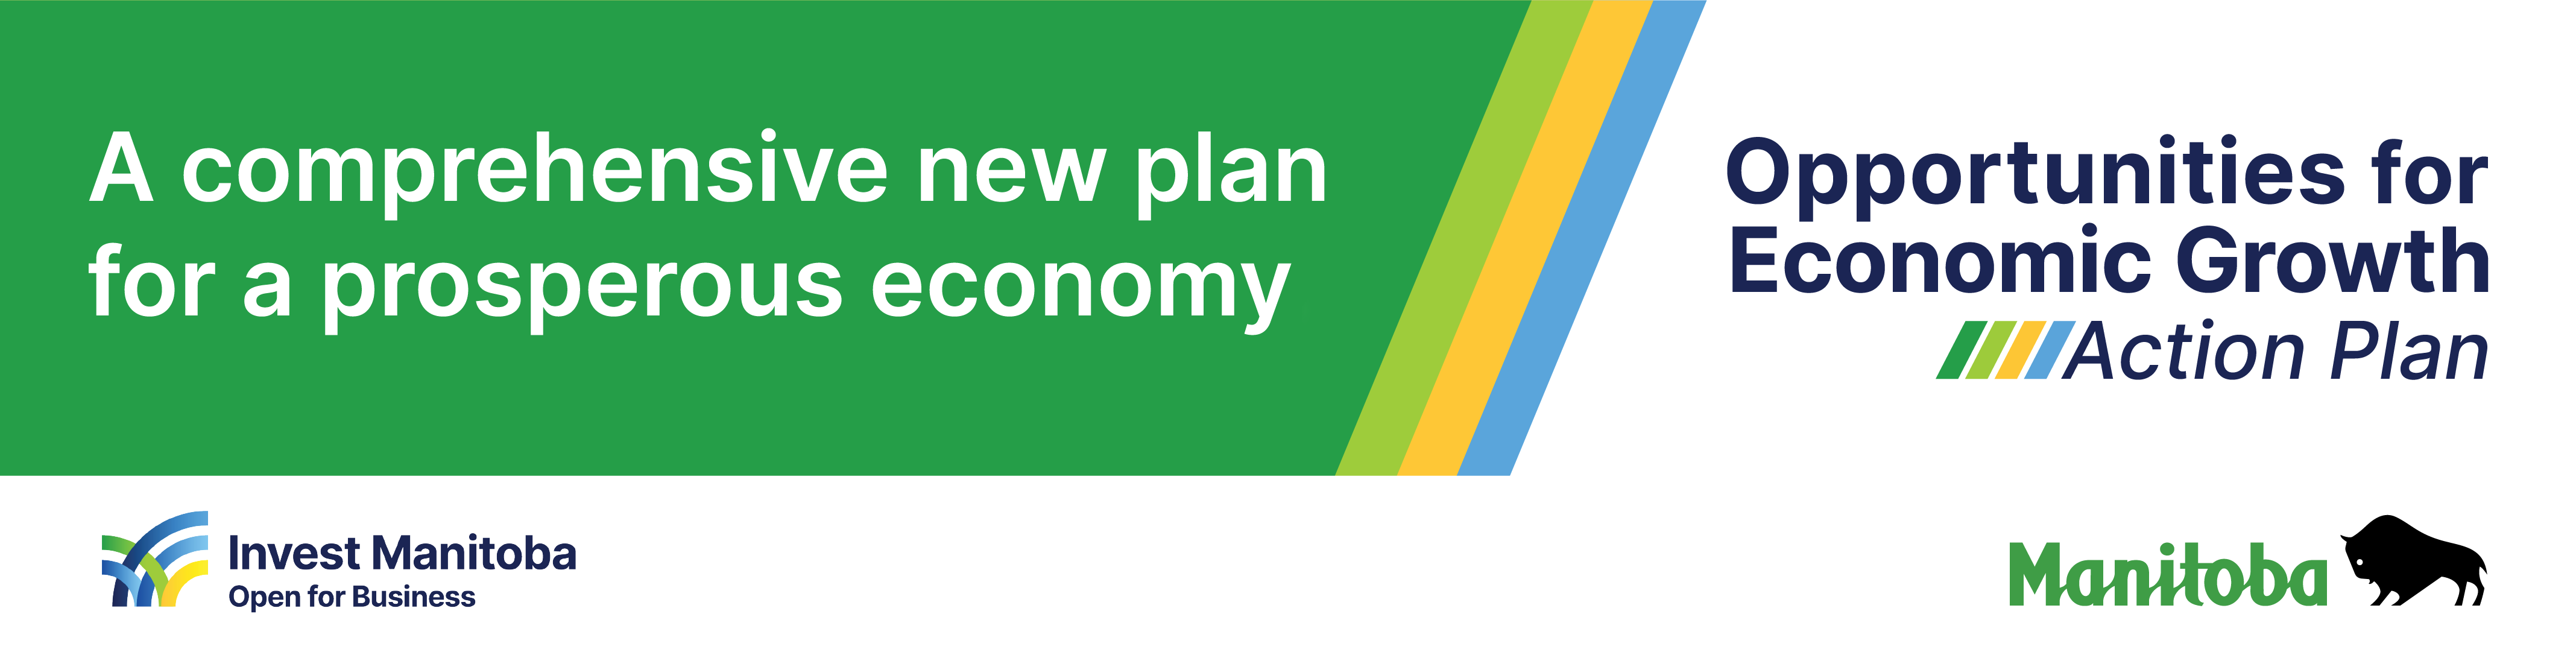 economic growth action plan manitoba